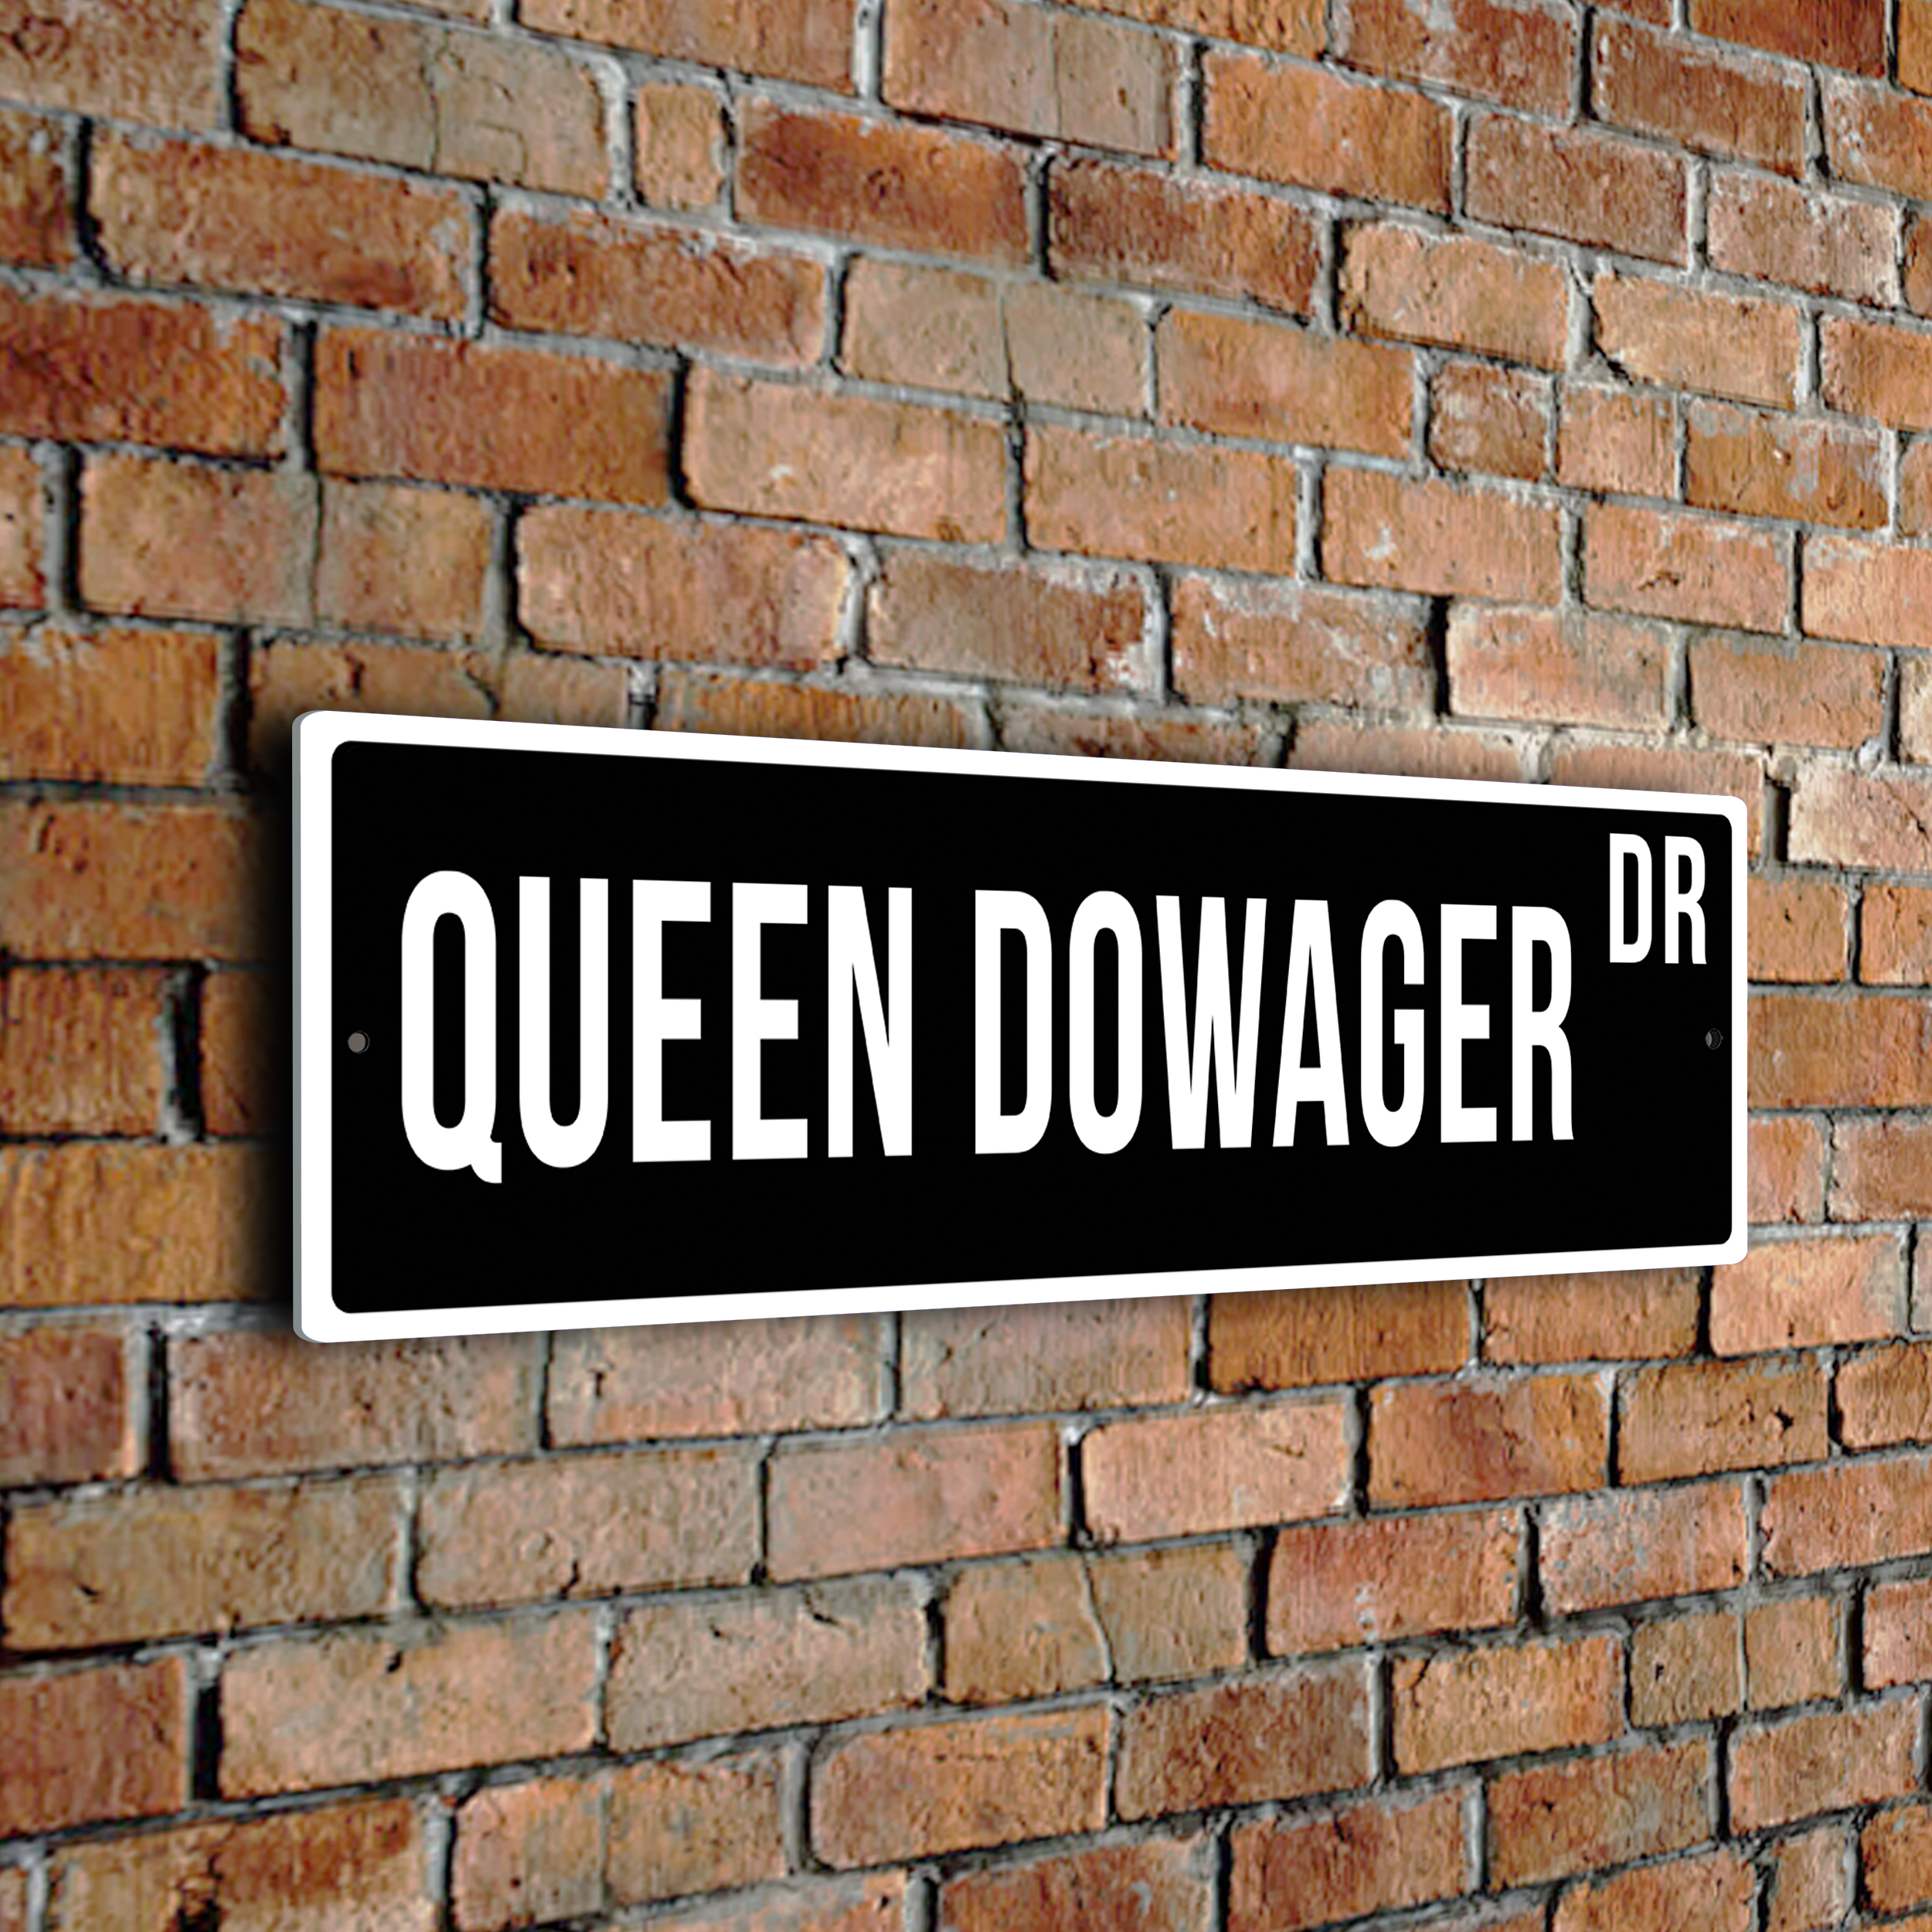 Queen Dowager street sign